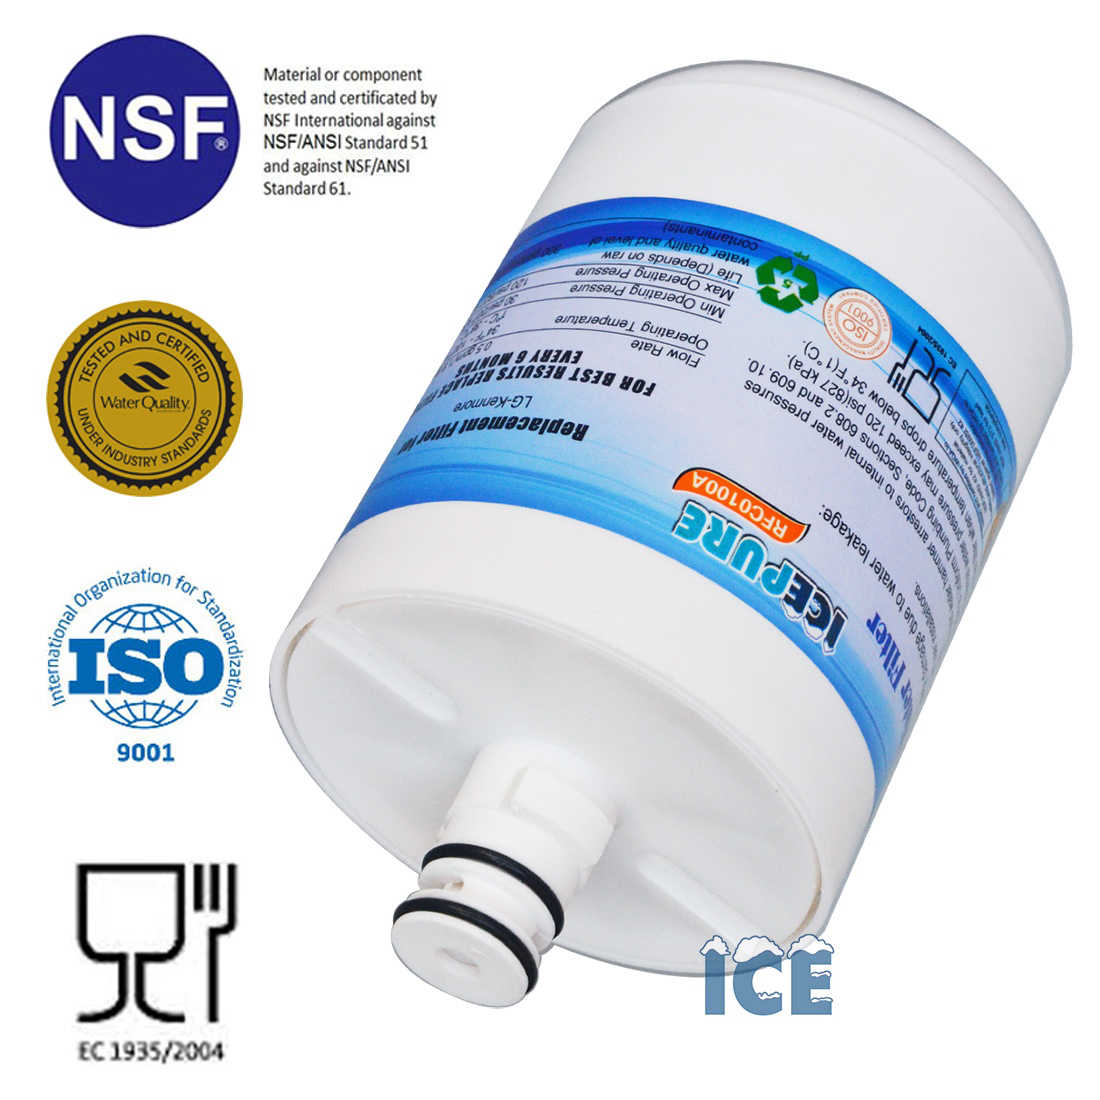 Filtre frigo americain ICEPURE RWF1100 A0550EC